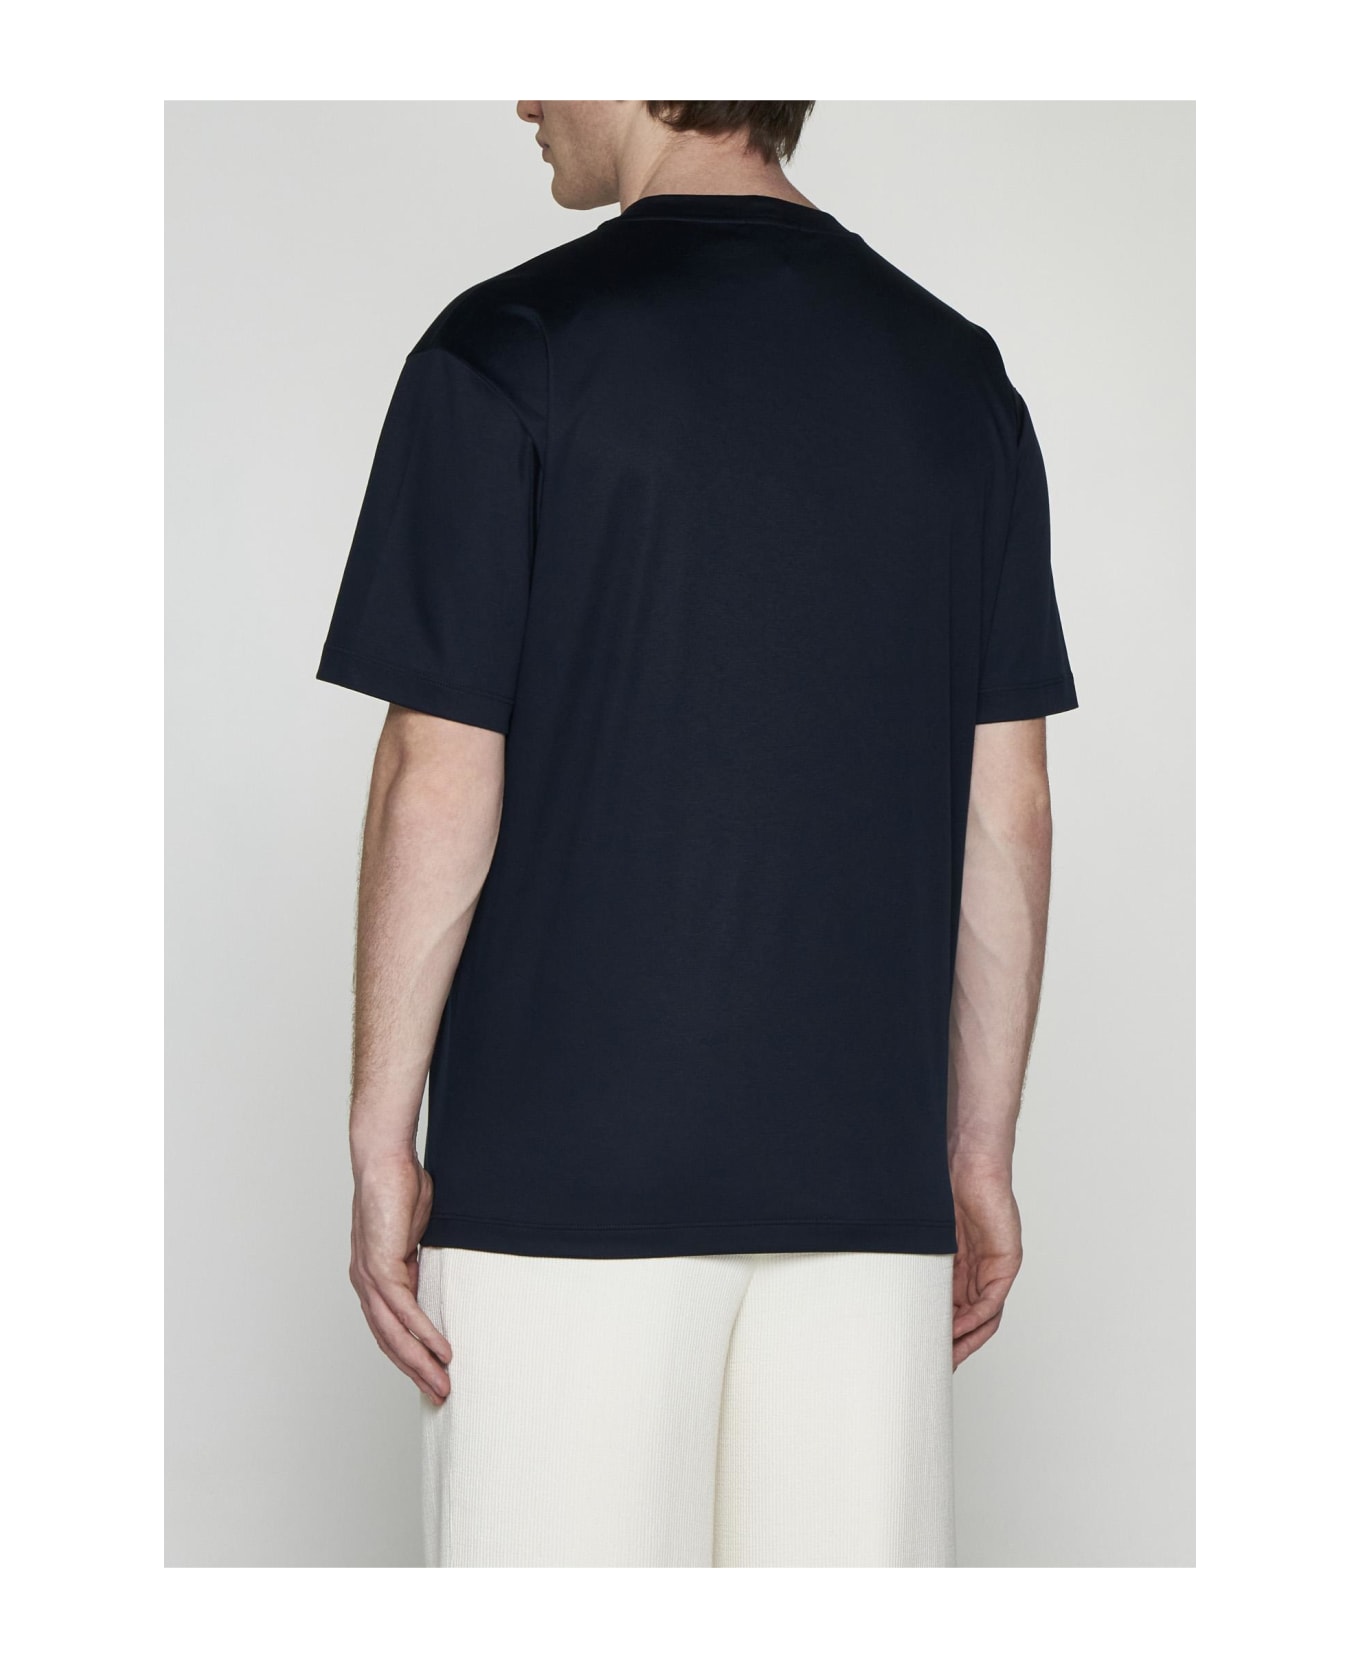 Giorgio Armani Logo Cotton T-shirt - Ubwf シャツ